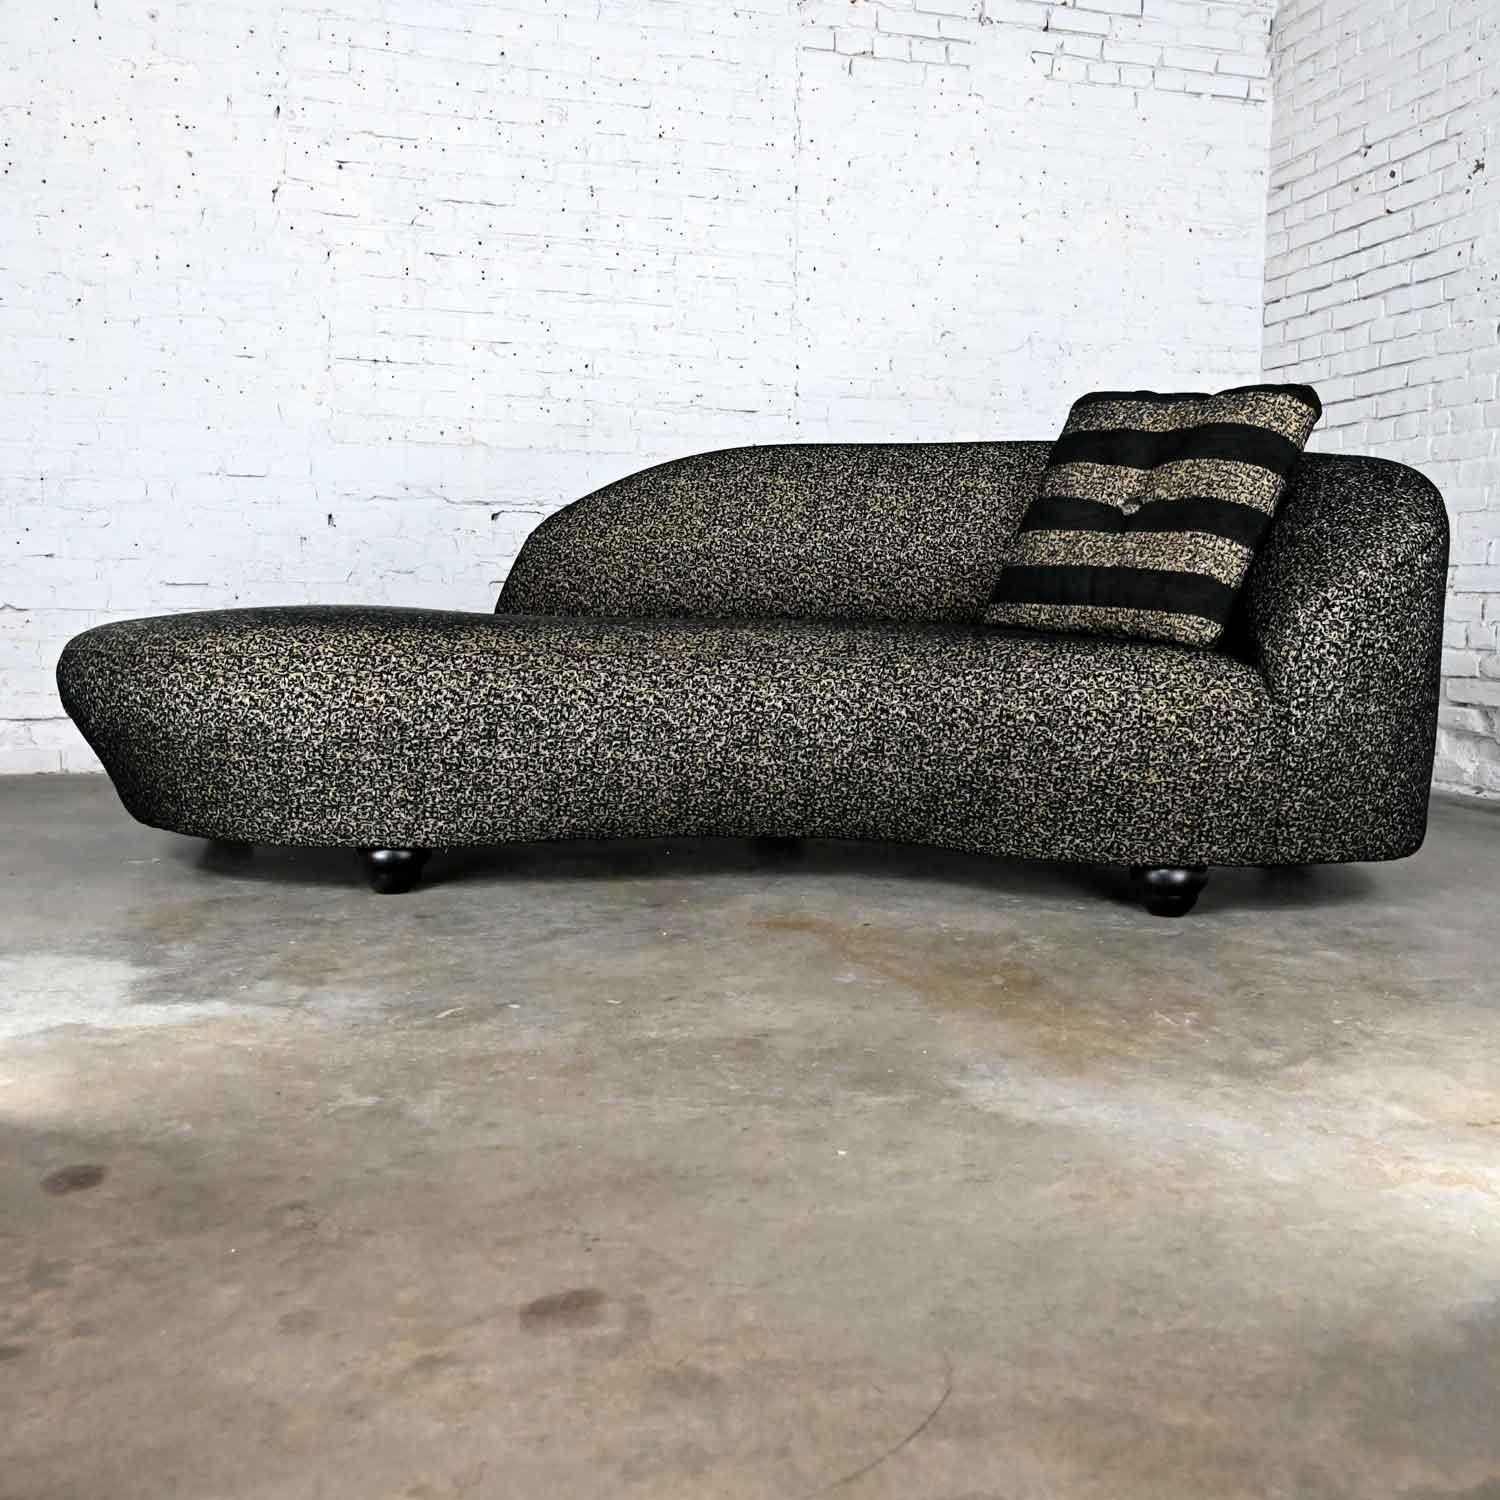 Postmodern Black & Khaki Sort of Animal Print Serpentine Cloud-Like Chaise Sofa For Sale 4